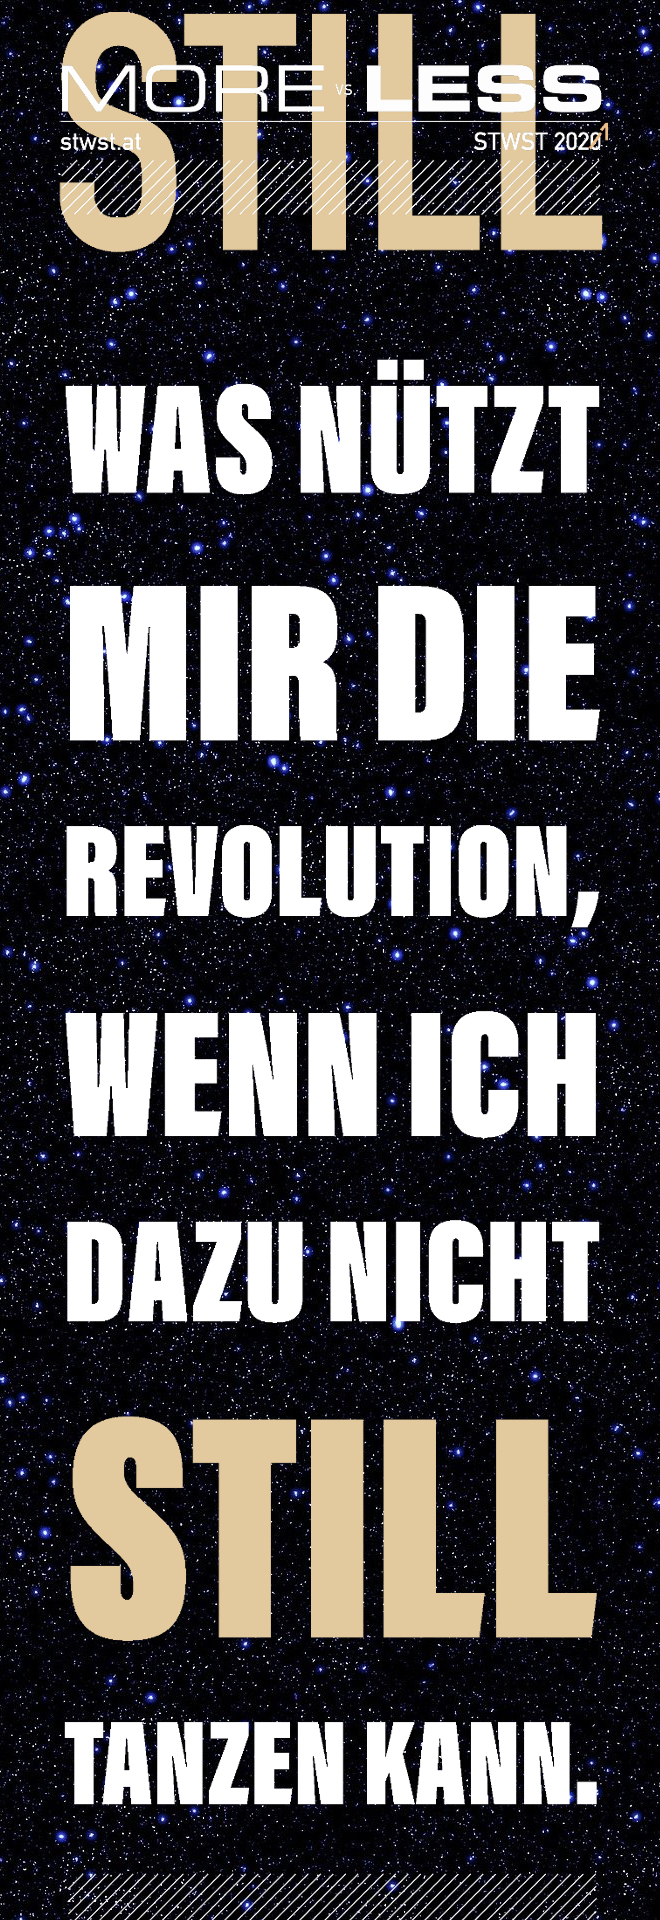 revolution_still_tanzen_bildsujet_stwst.jpg